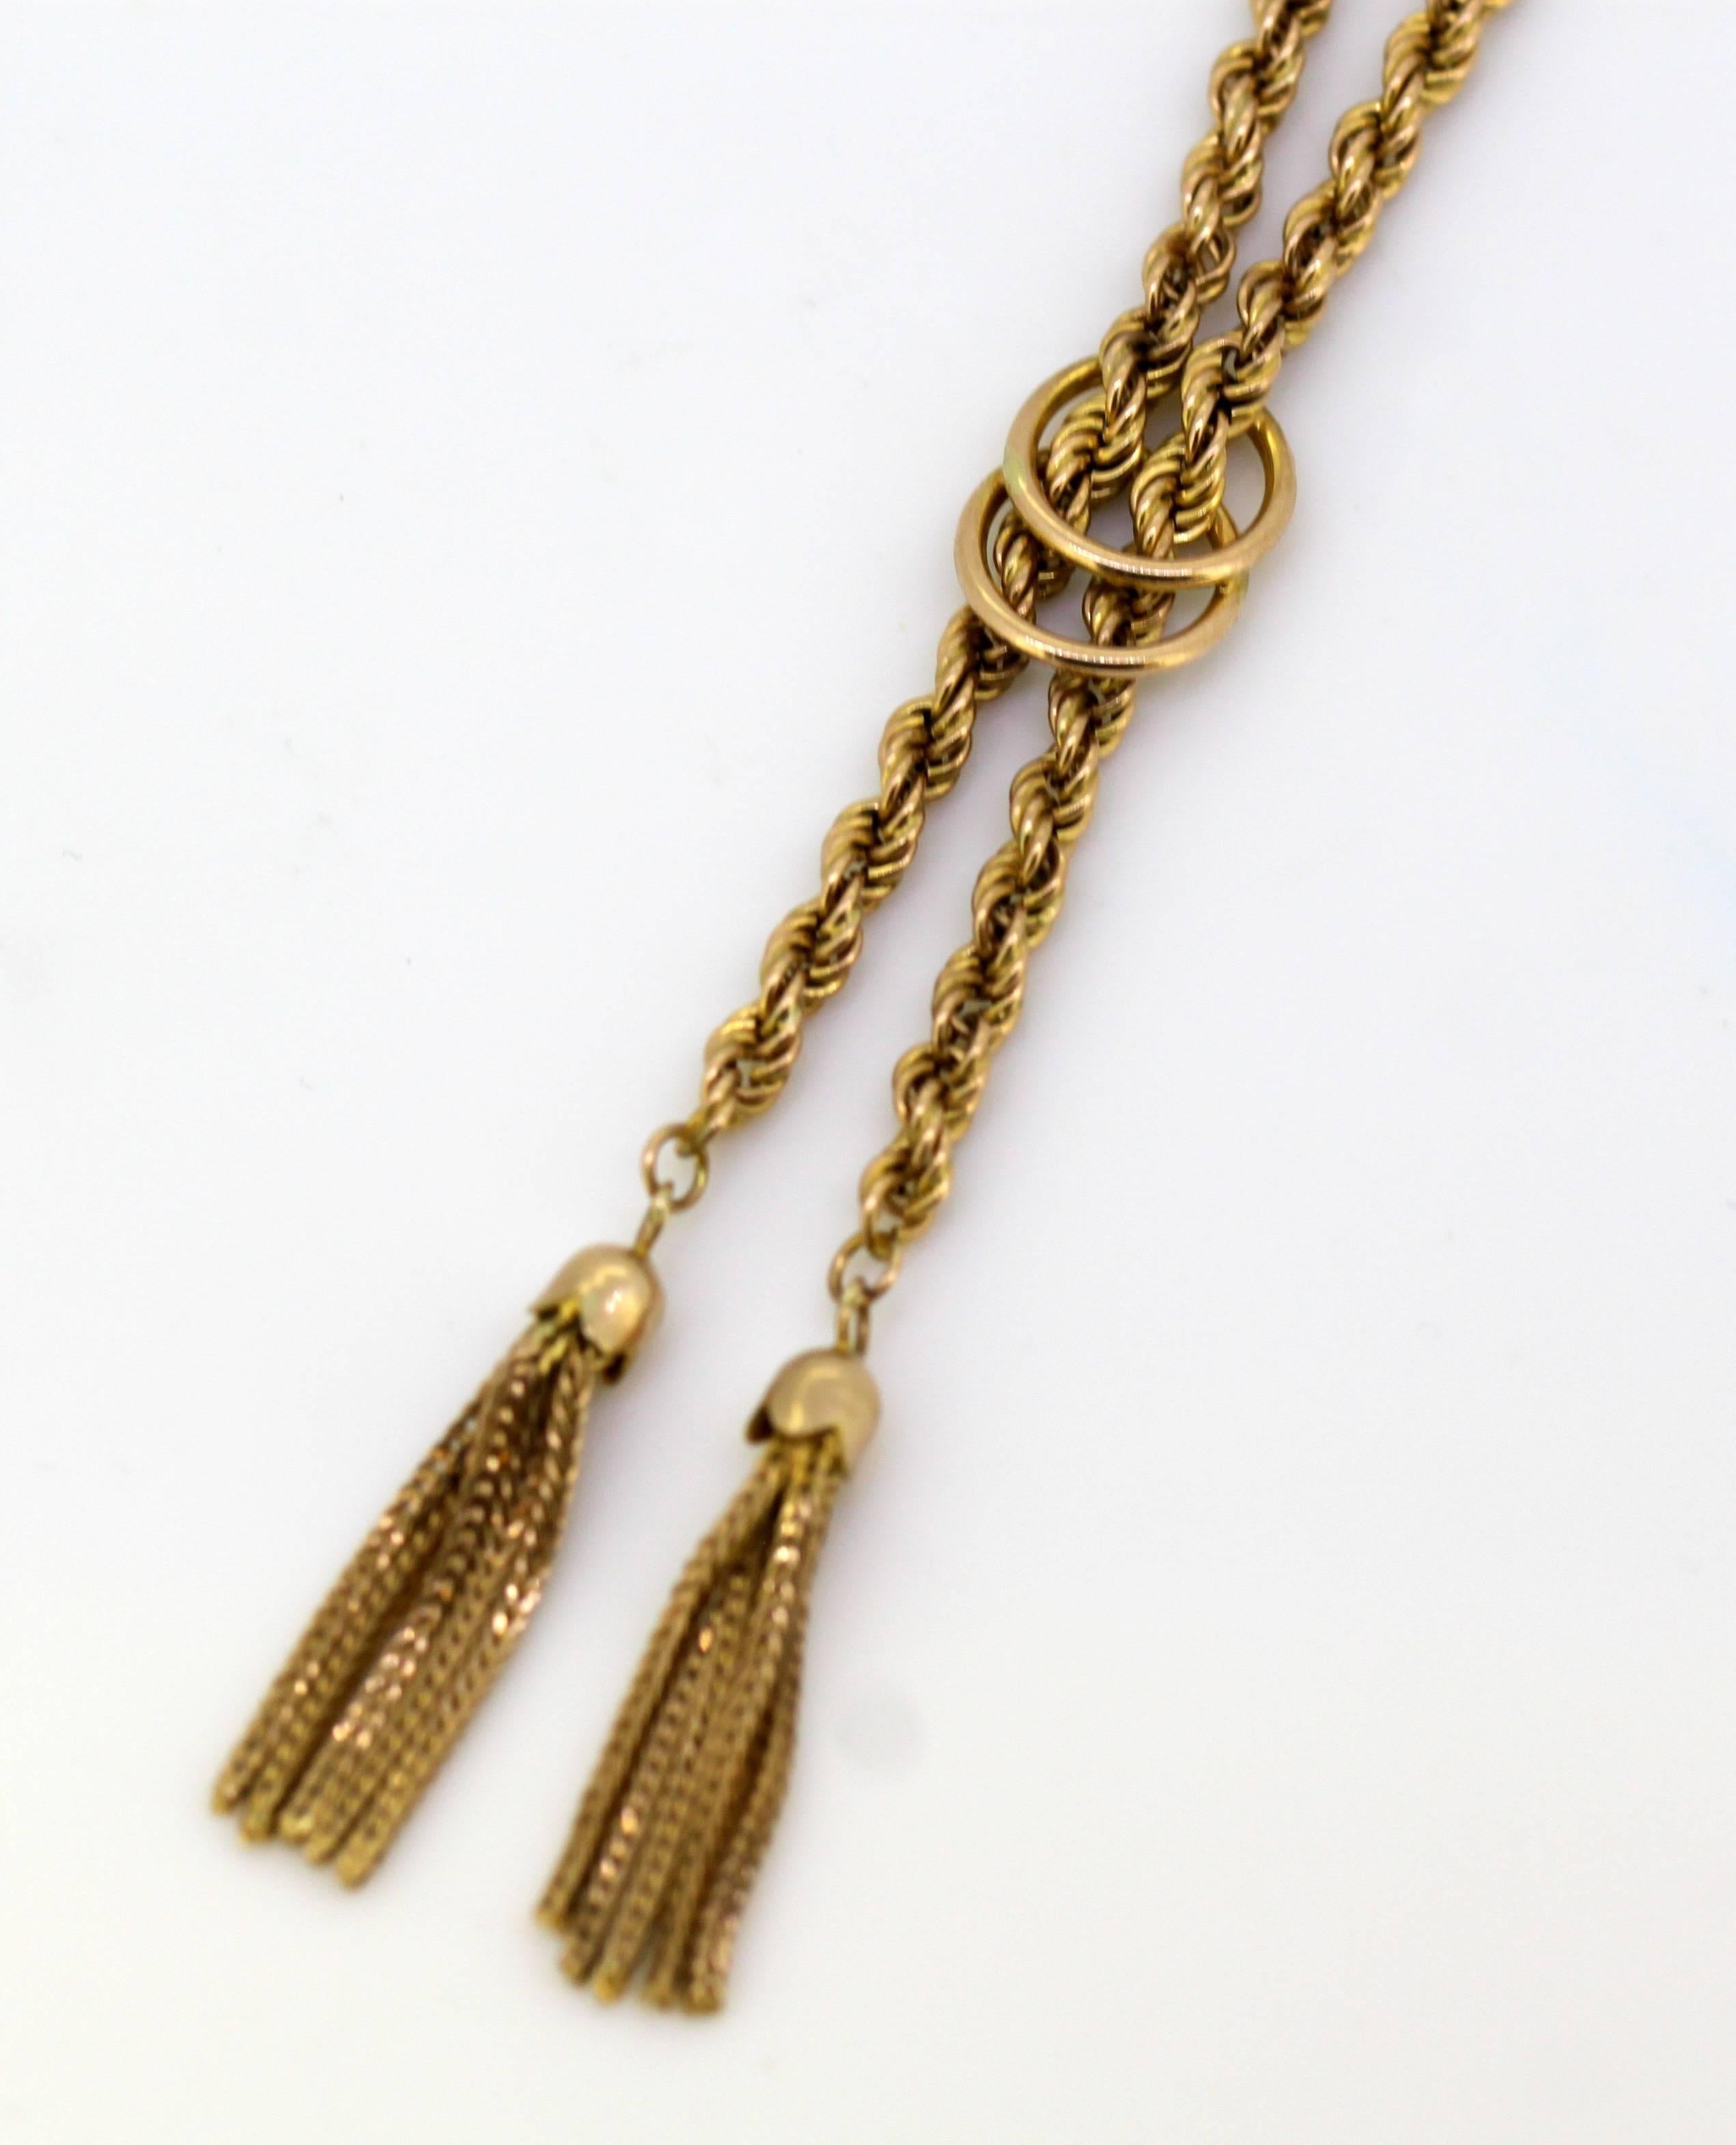 Women's or Men's Vintage 9 Karat Yellow Gold Necklace by Addis & Co, London Import 1980